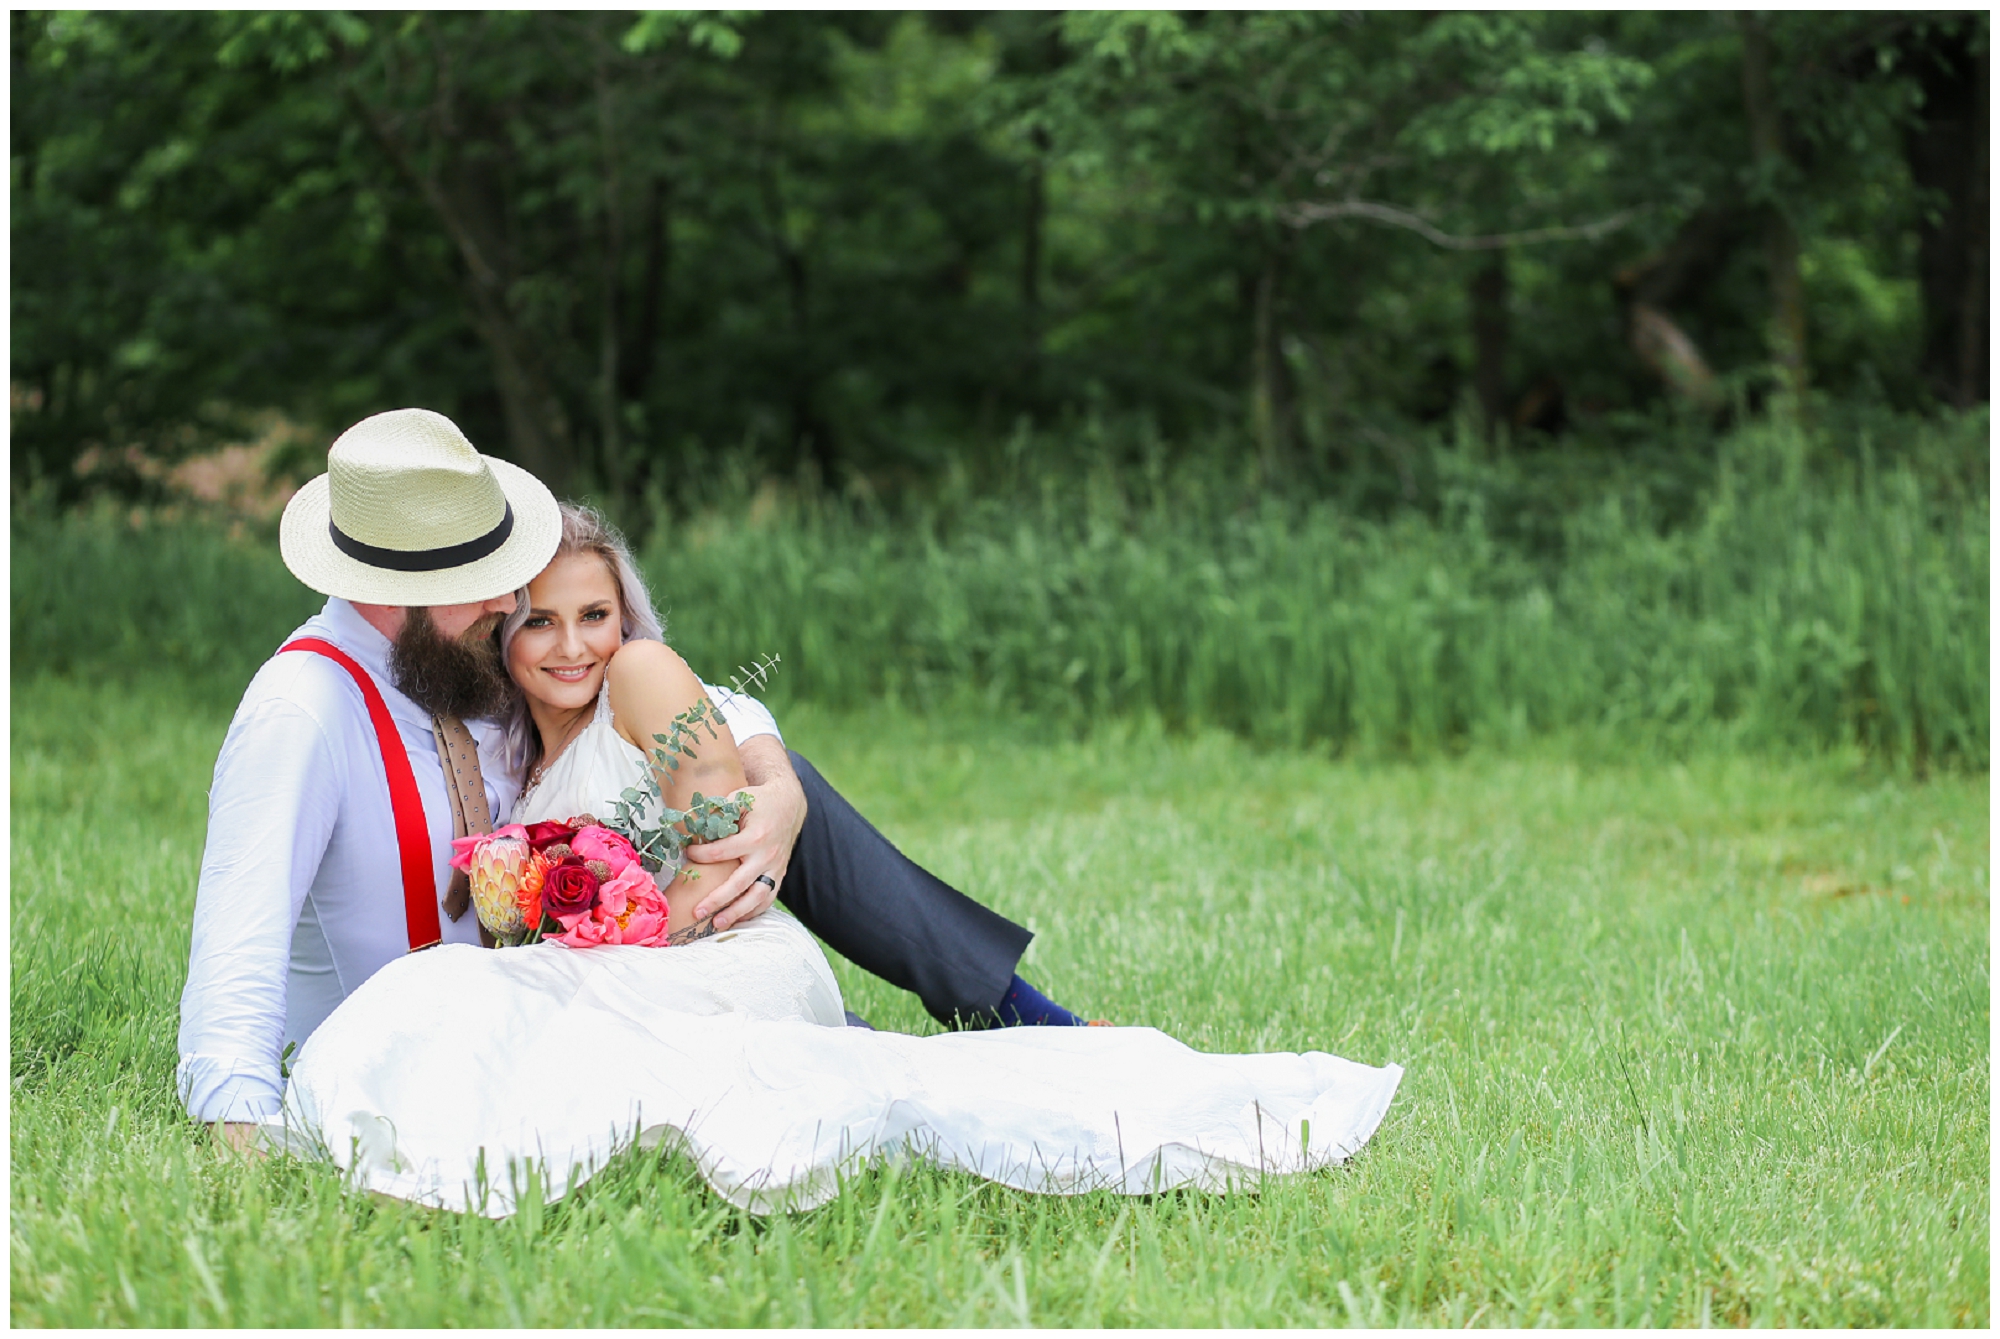 Bride & Groom Photos - Hot Pink Bouquet - Kansas City Wedding Photographer - Wedding at Legacy Hills - Mariam Saifan 